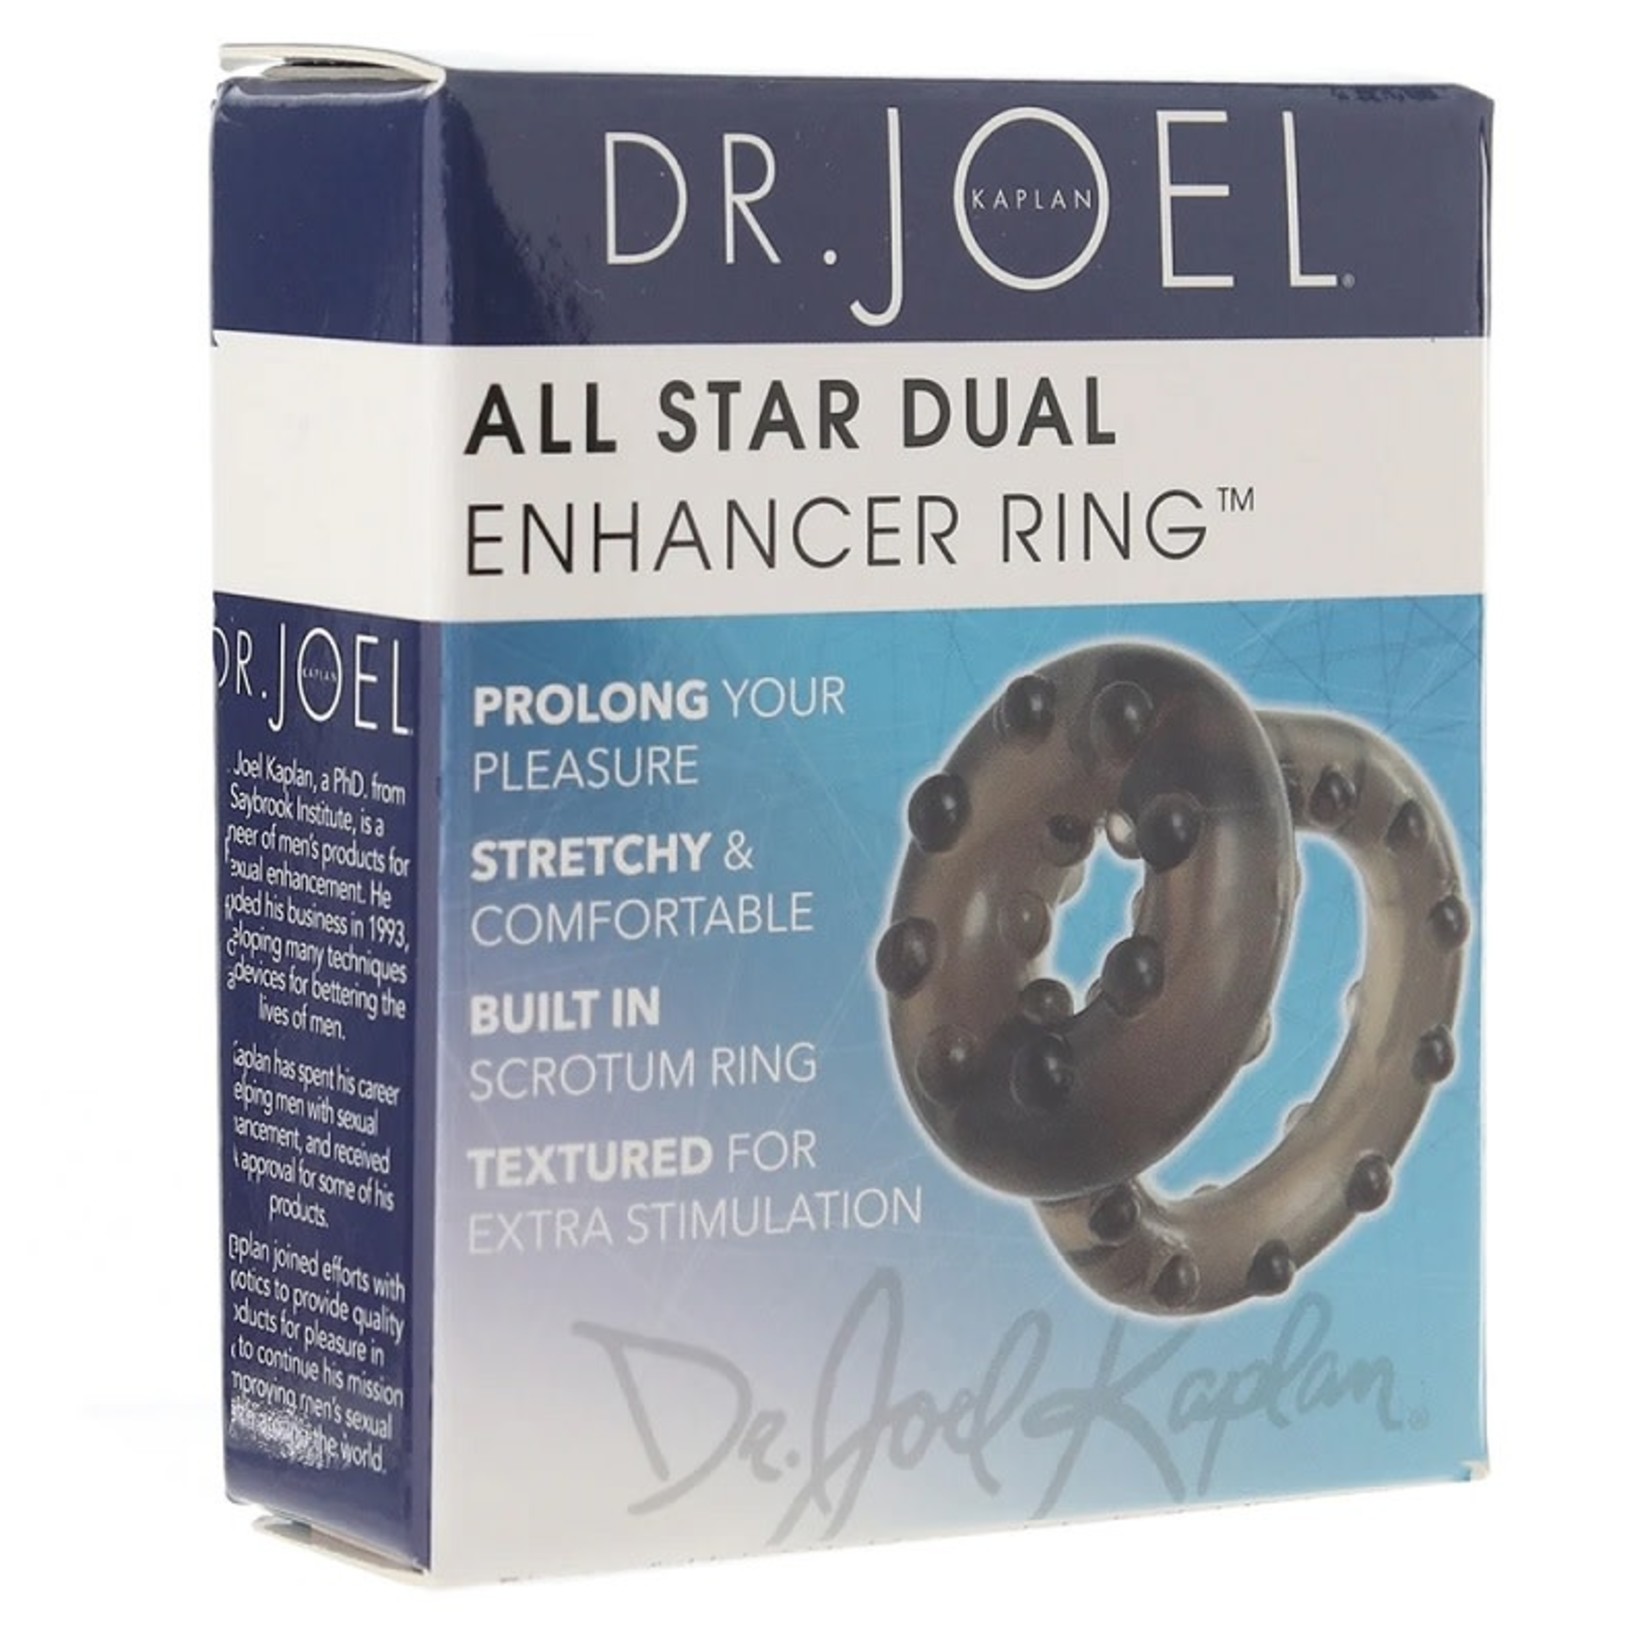 CALEXOTICS DR JOEL ALL STAR DUAL ENHANCER RING